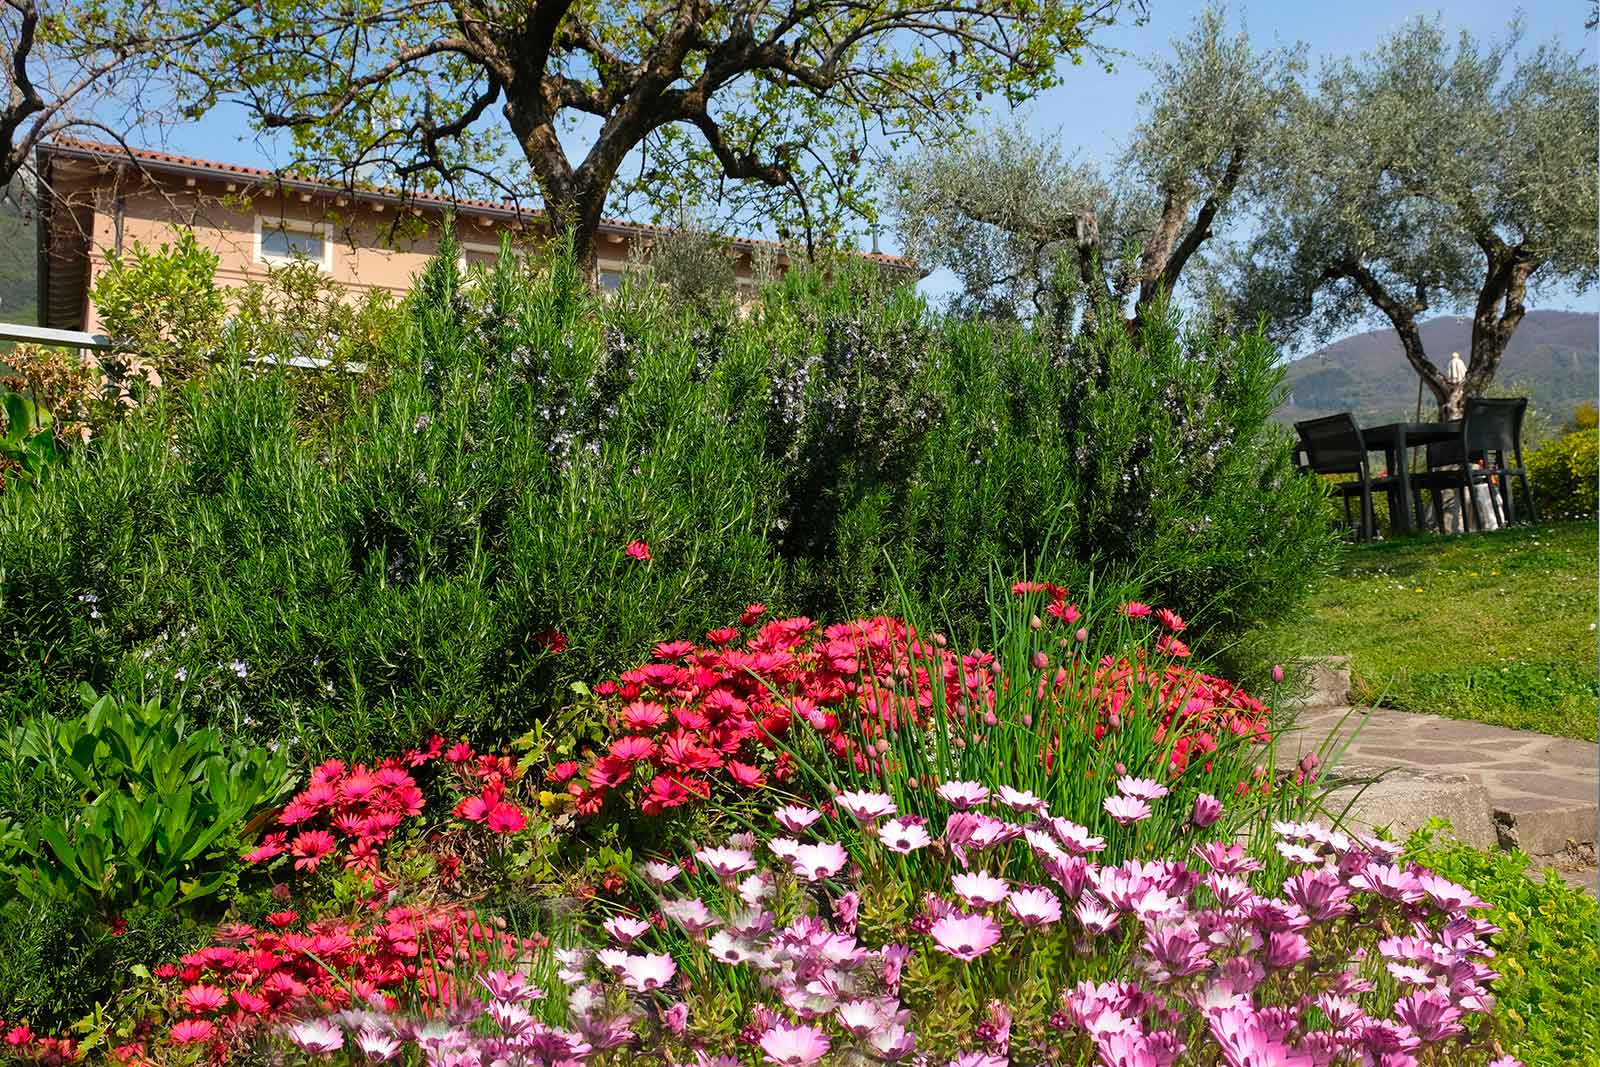 June on Lake Garda: where nature and culture meet